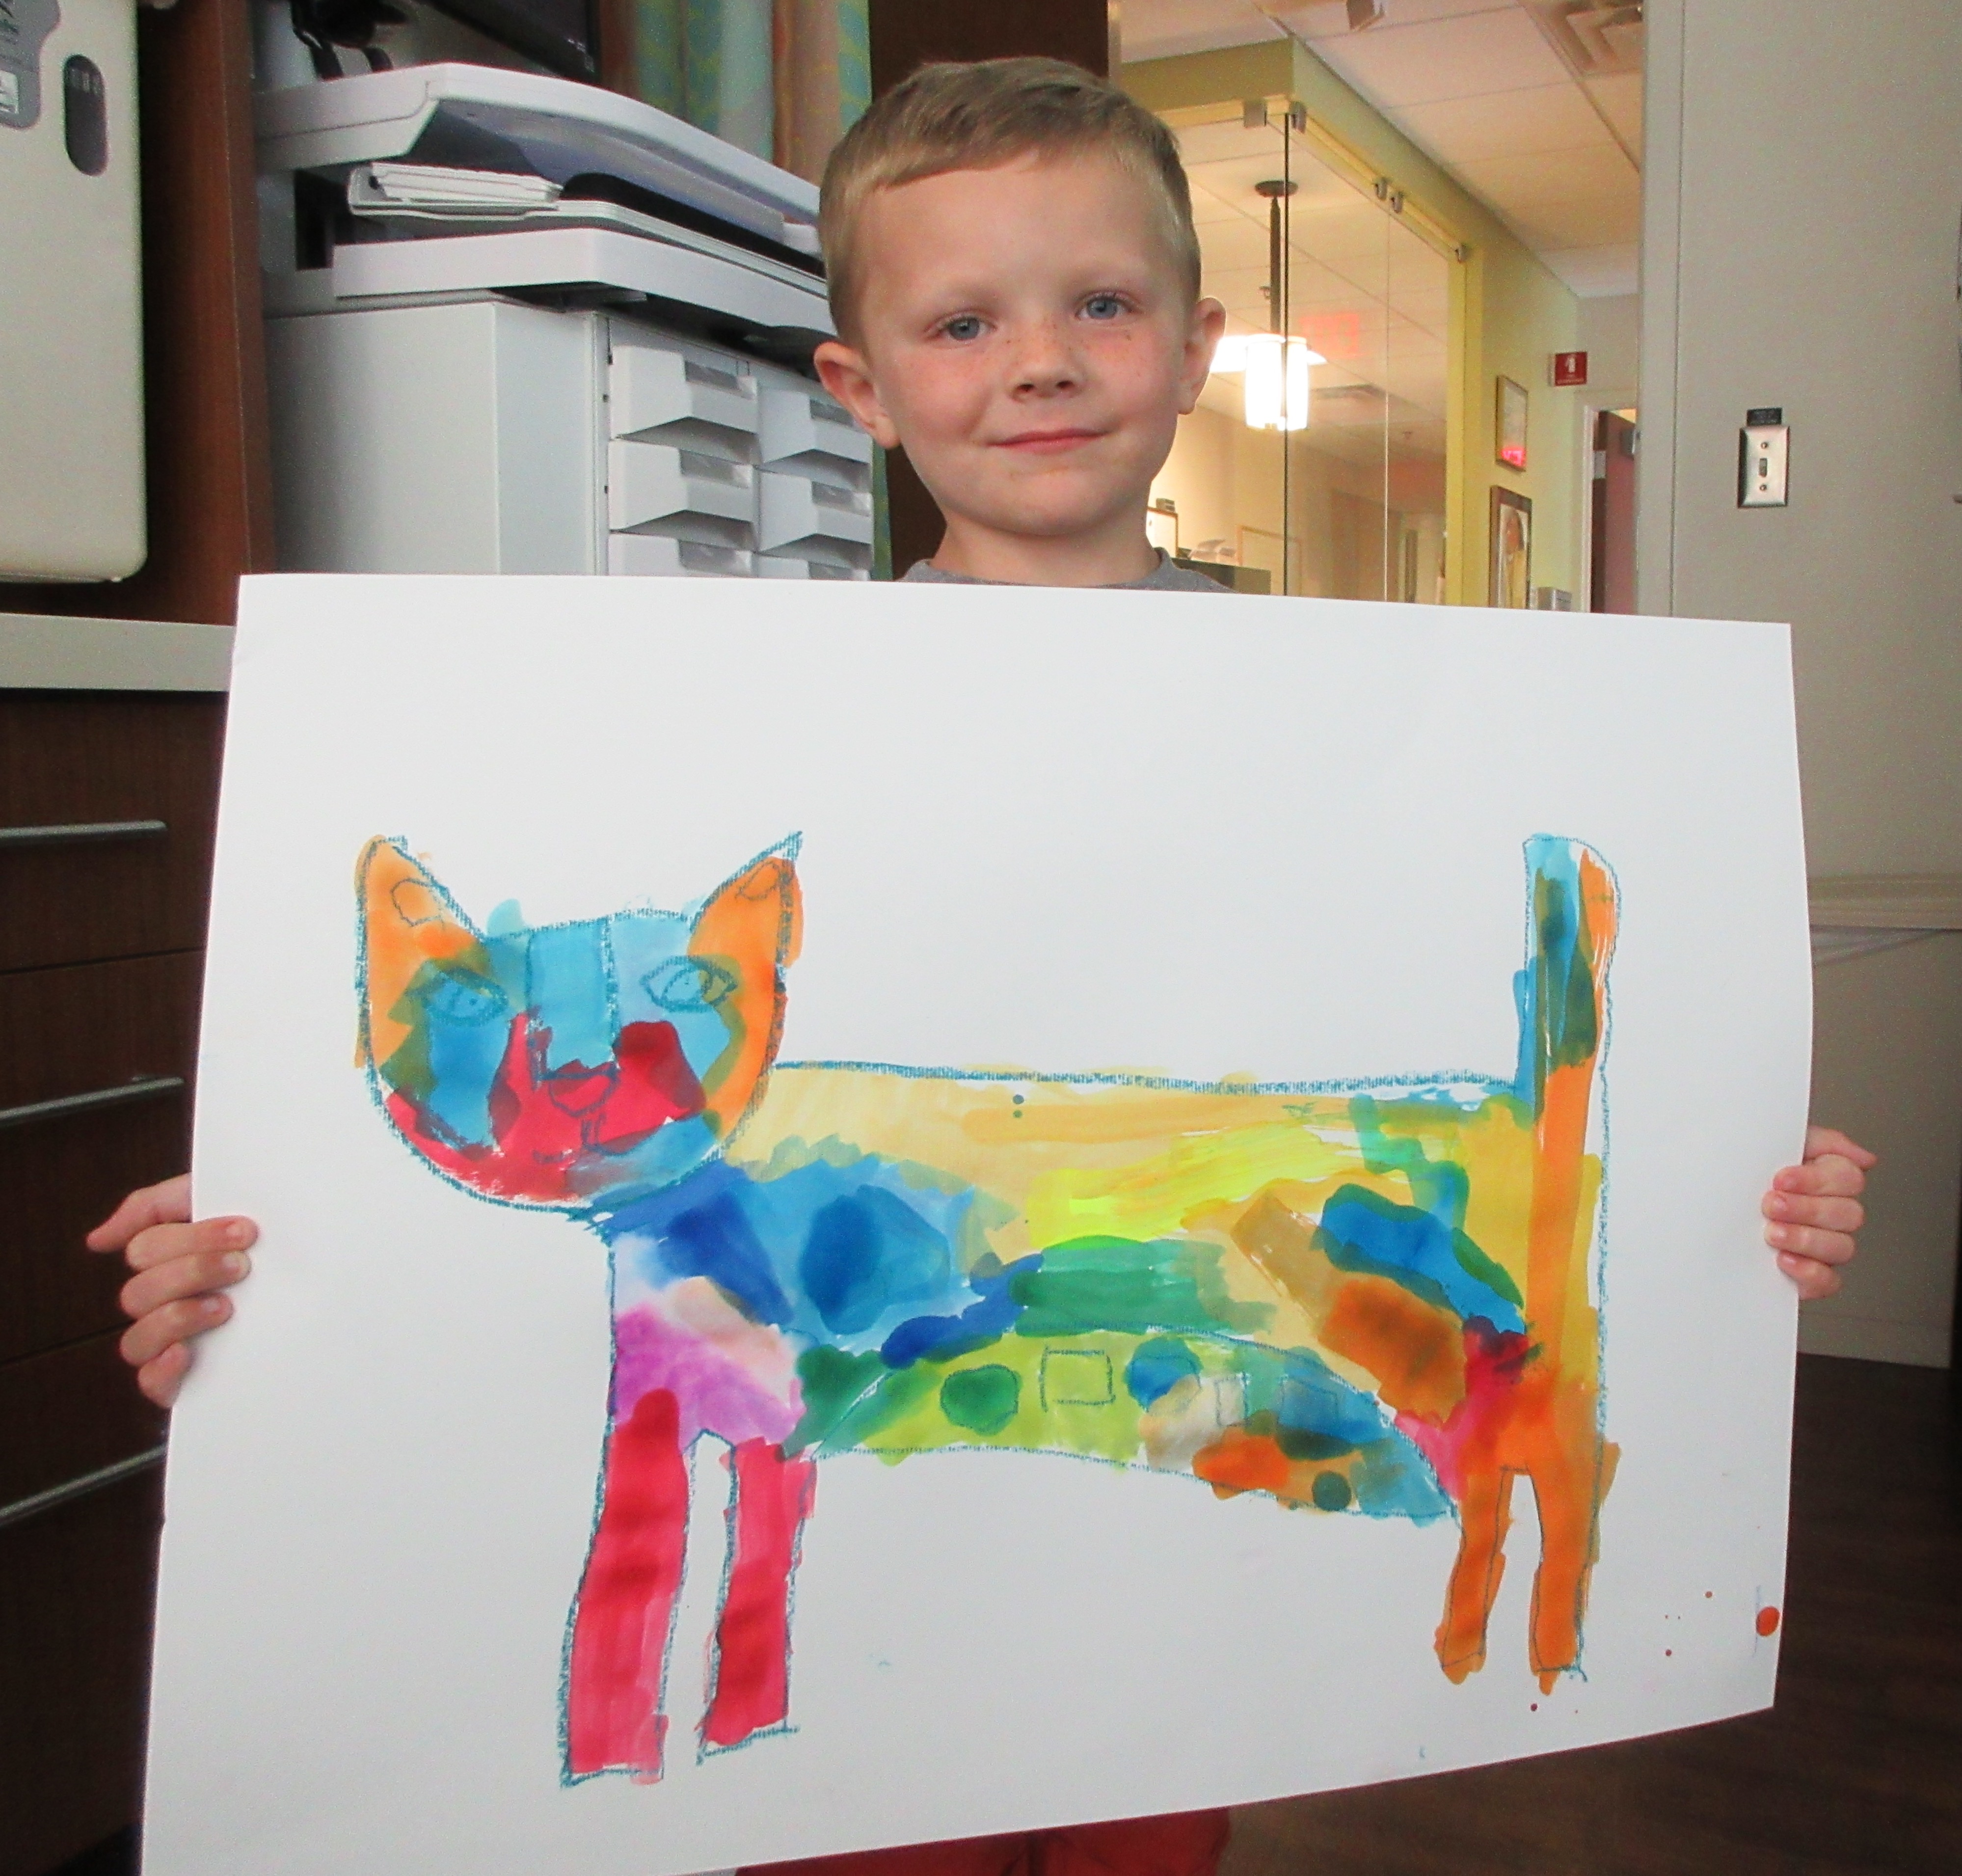 Arts For Life brings creative joy to pediatric patients in North Carolina